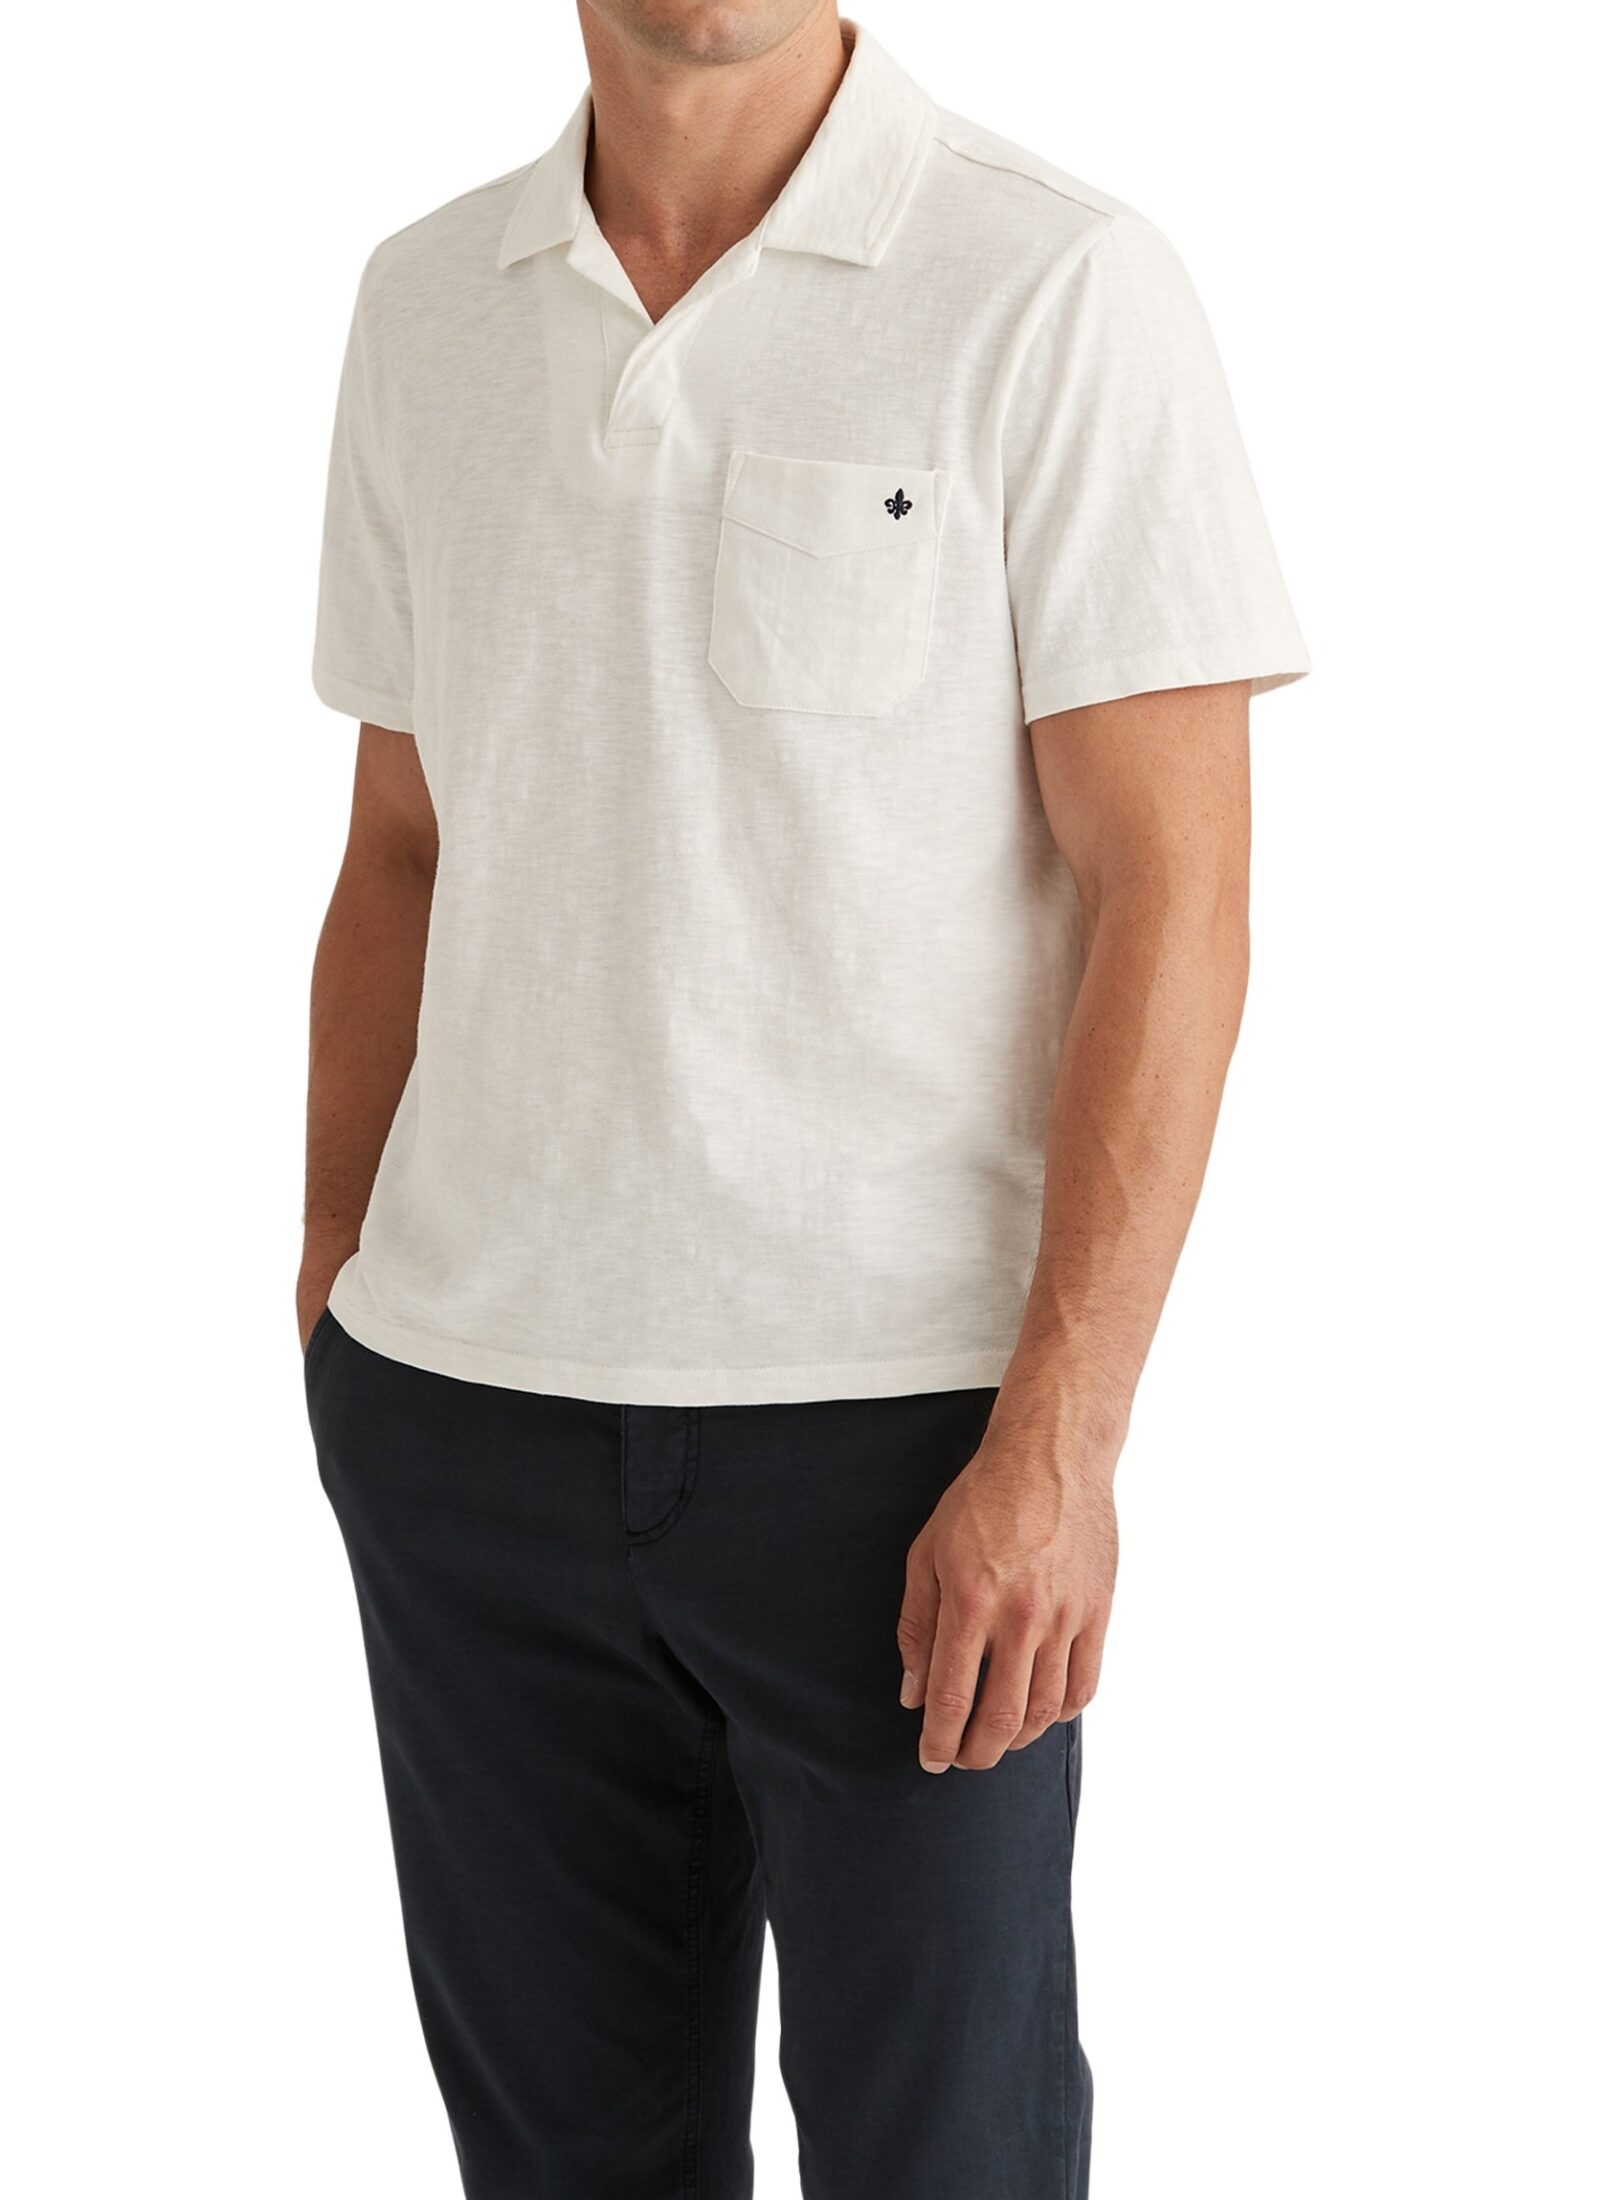 300194-clopton-jersey-shirt-02-off-white-1